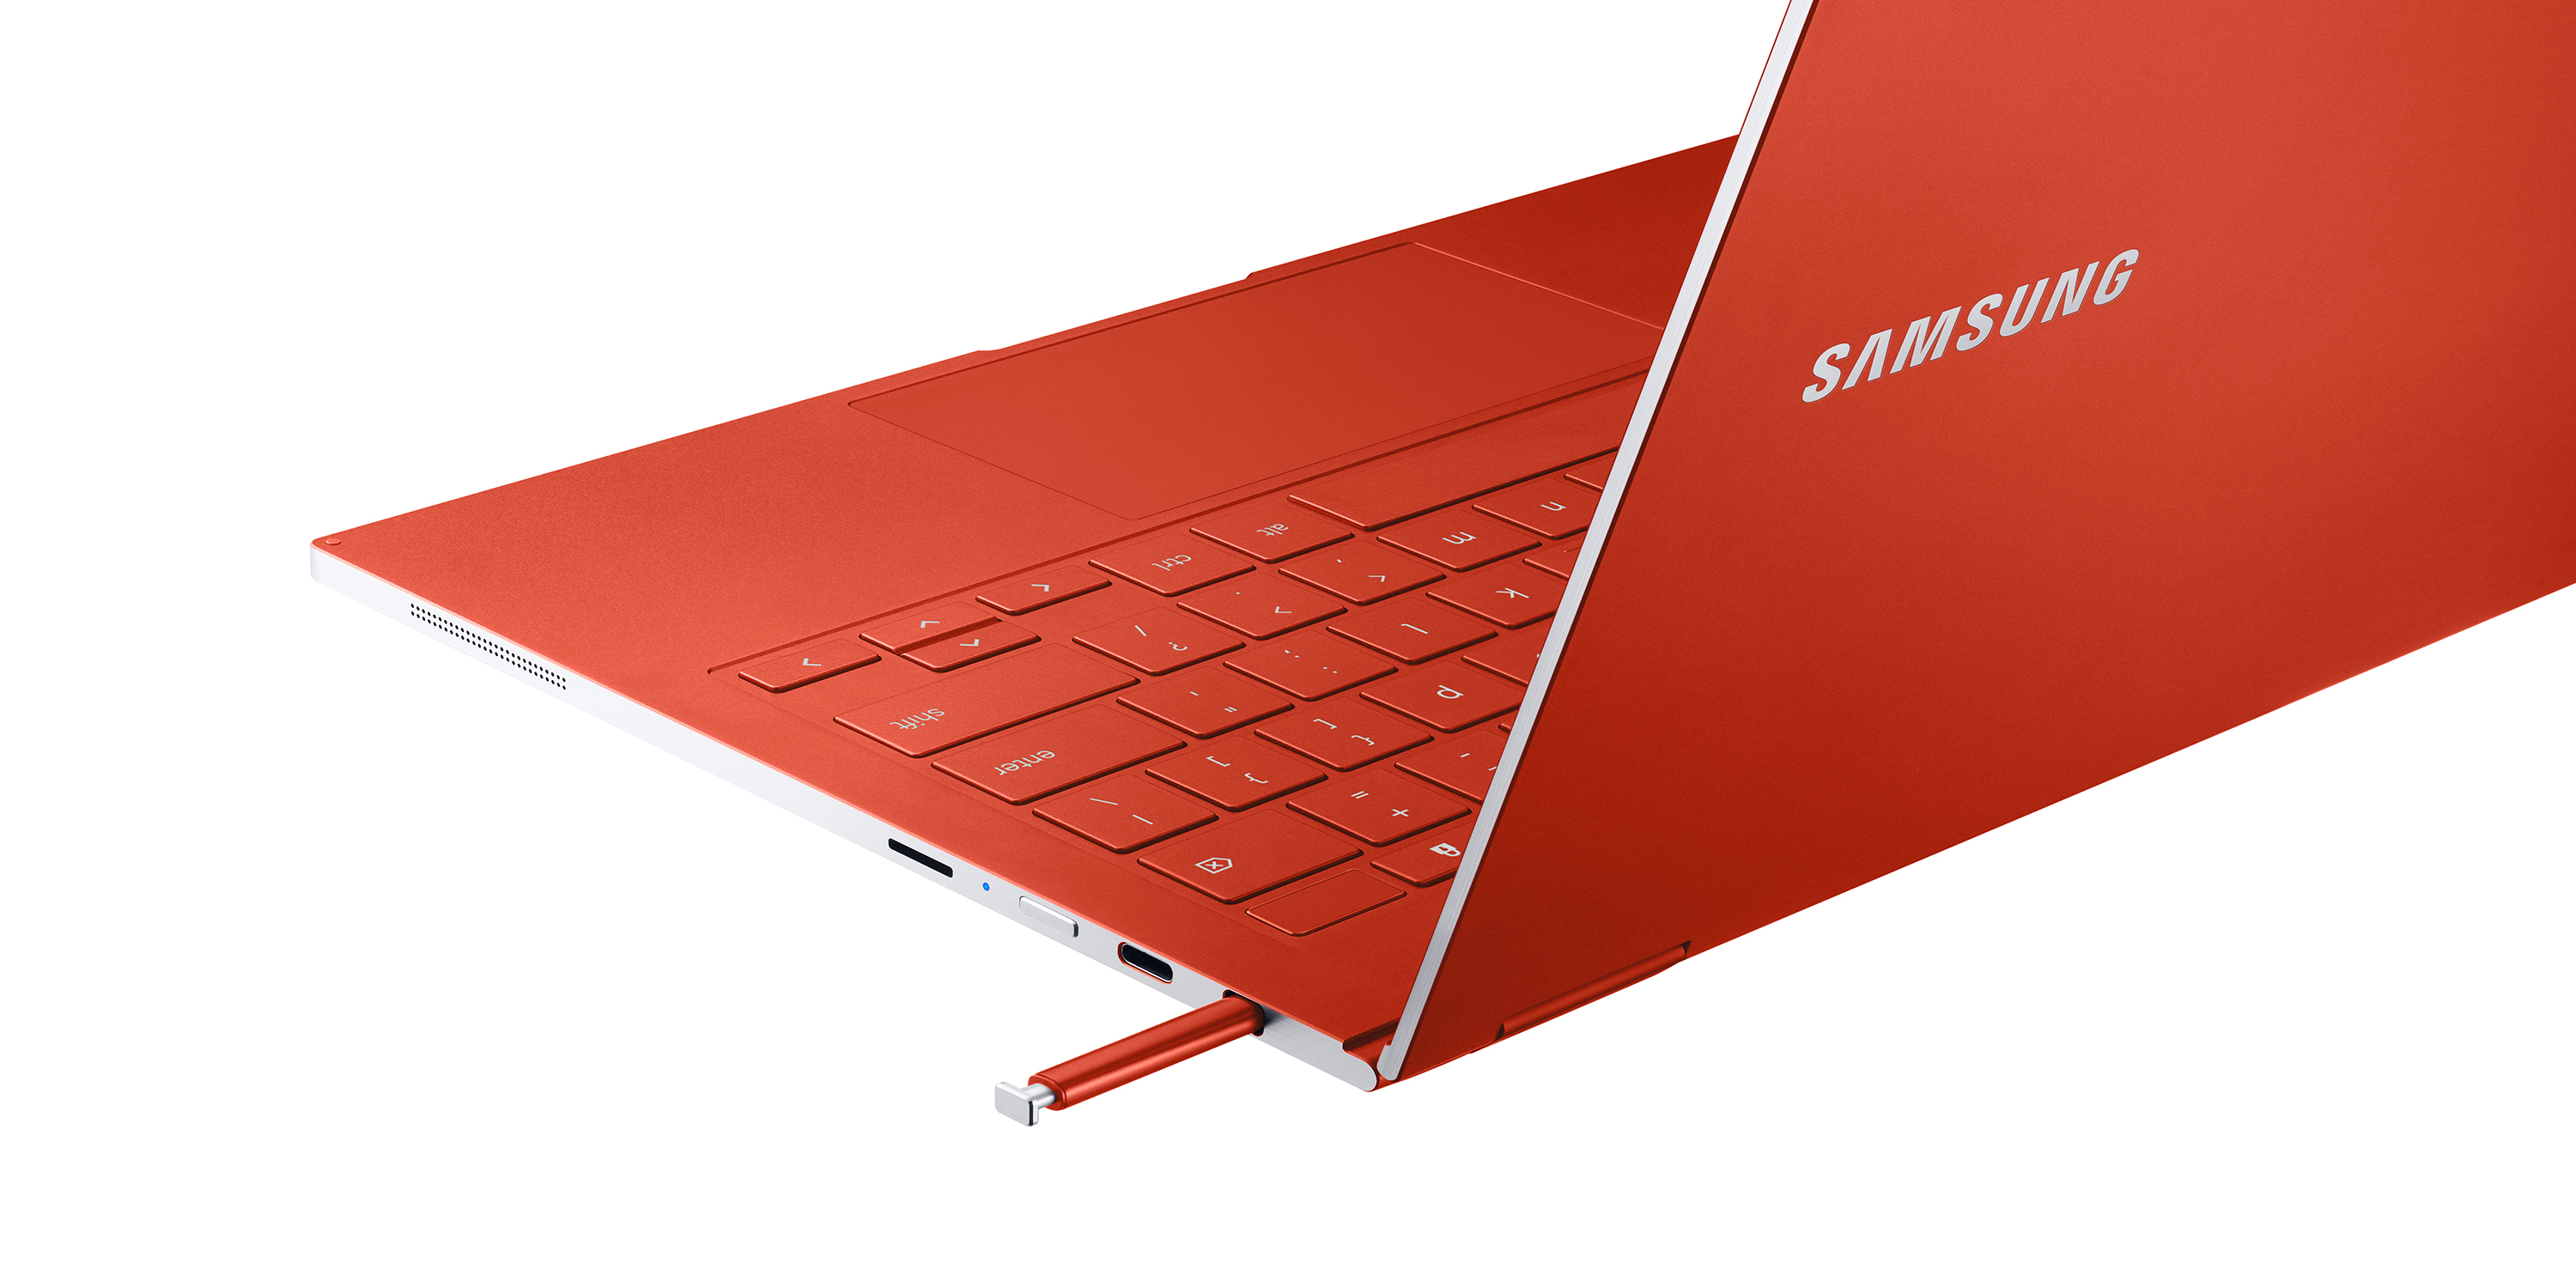 Samsung Galaxy Chromebook 4k Amoled 10th Gen Intel 9to5google